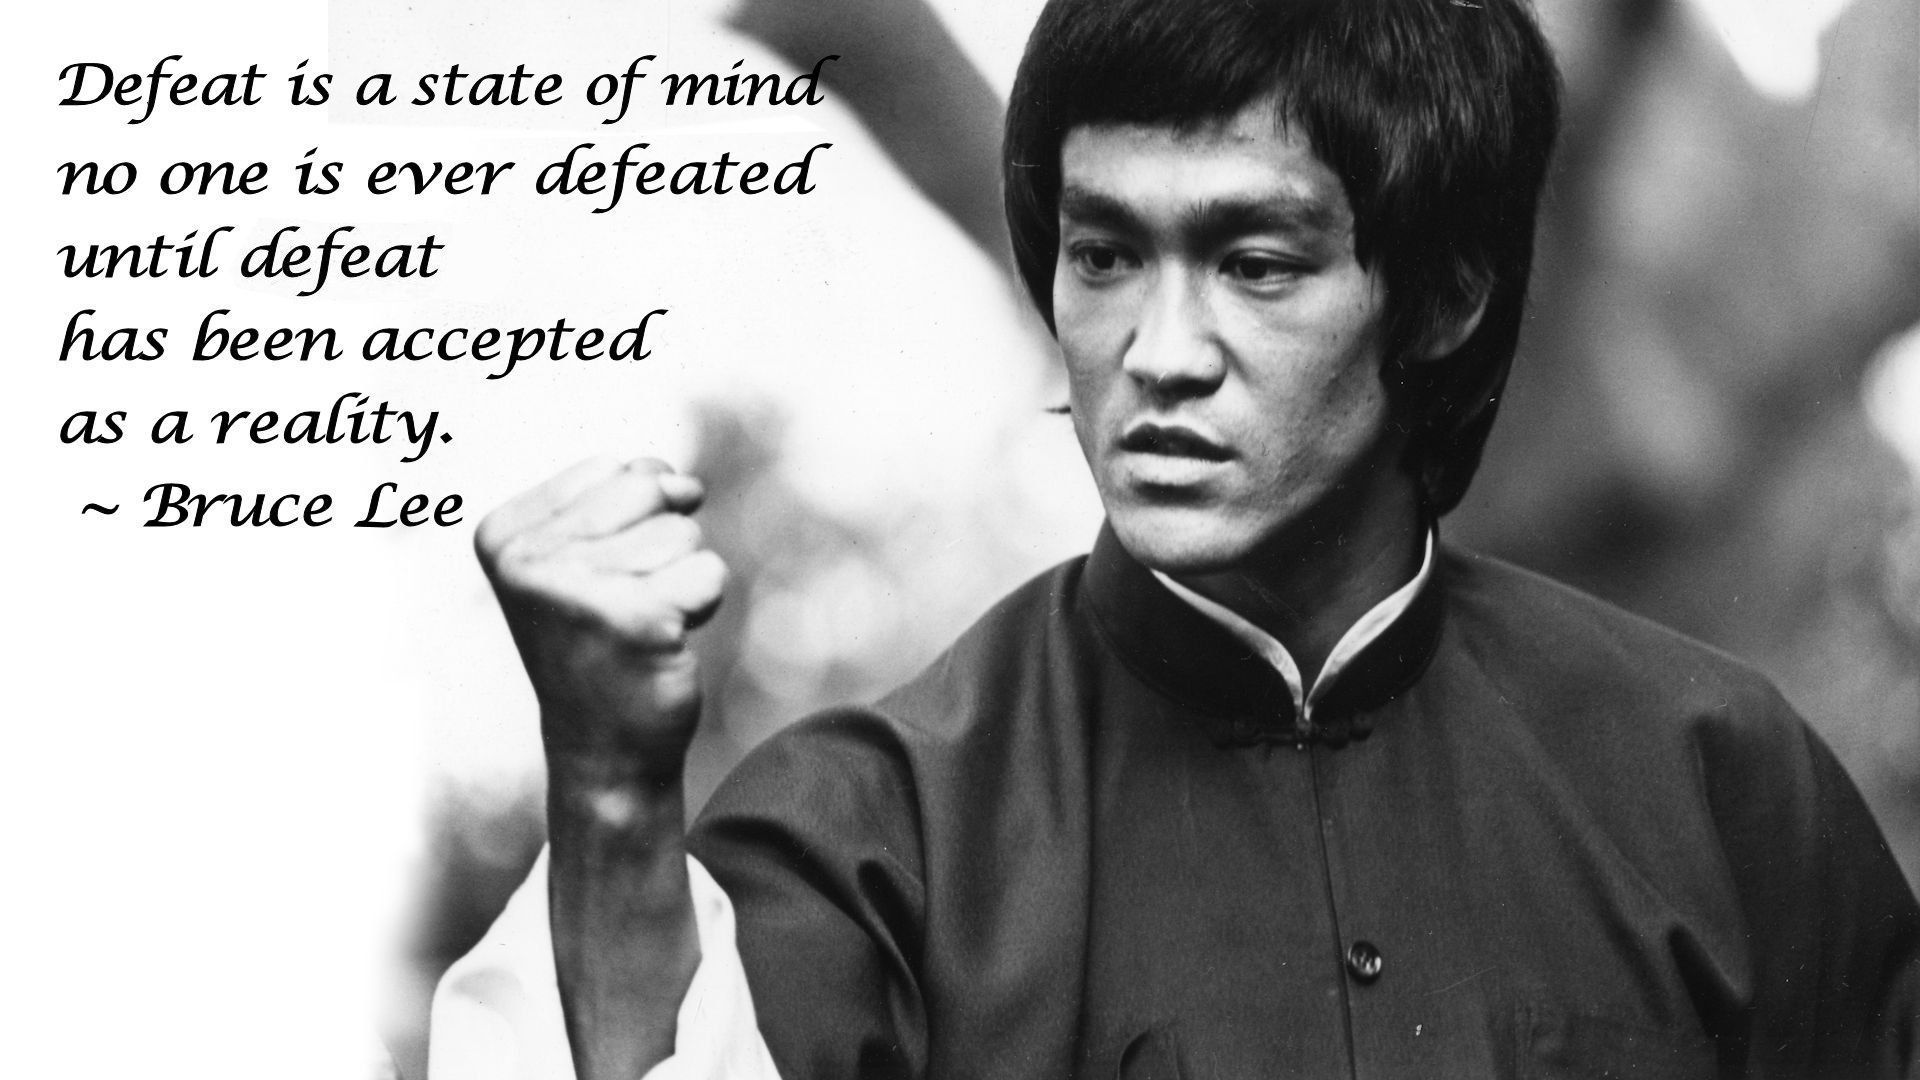 Bruce Lee Quote HD Wallpaper | 1920x1080 | ID:51859